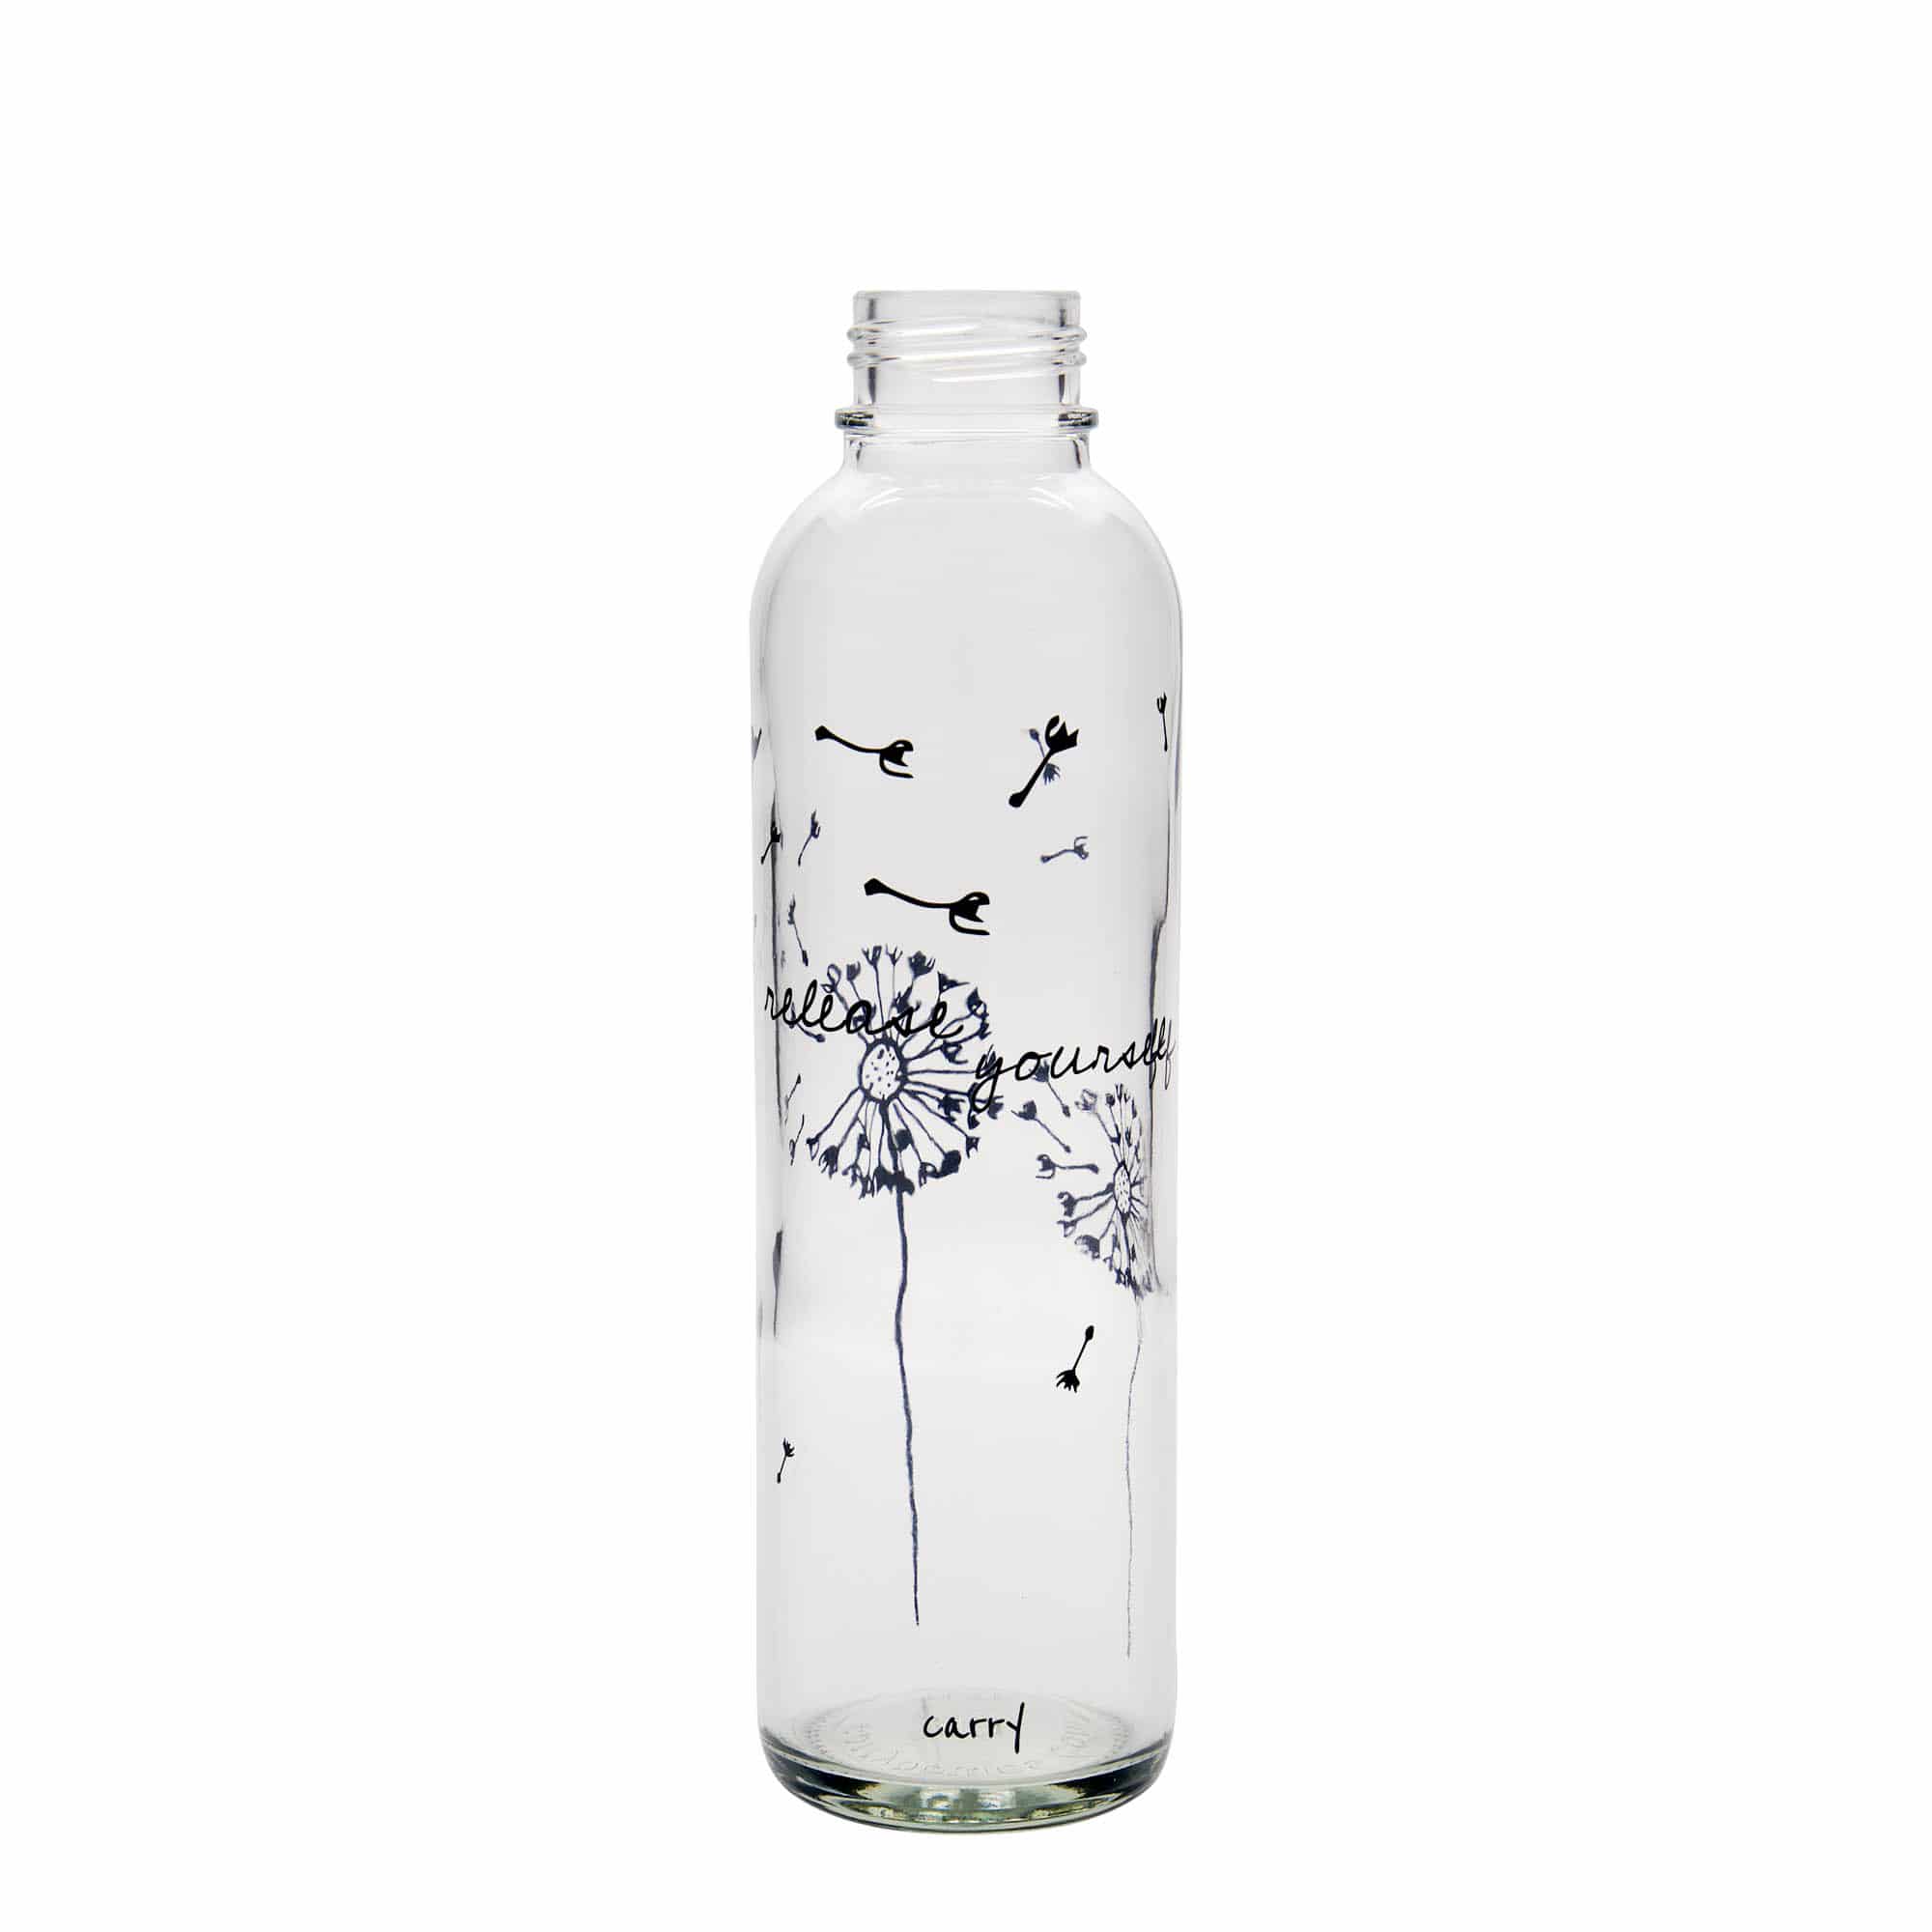 700 ml water bottle ‘CARRY Bottle’, print: Release Yourself, closure: screw cap